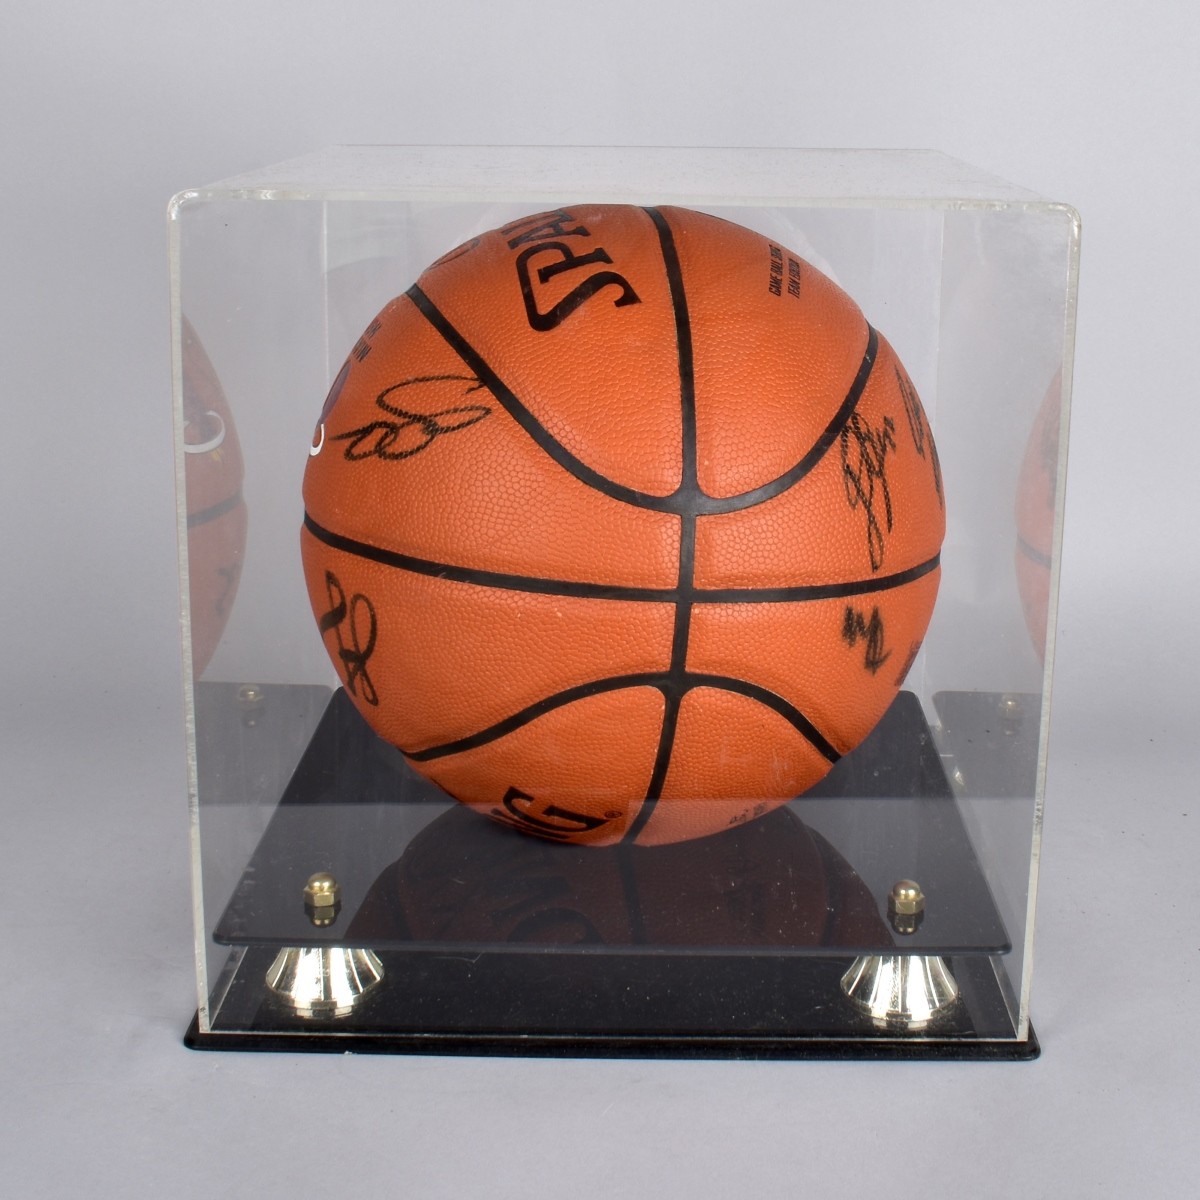 2012 - 2014 Autographed Miami Heat Basketball